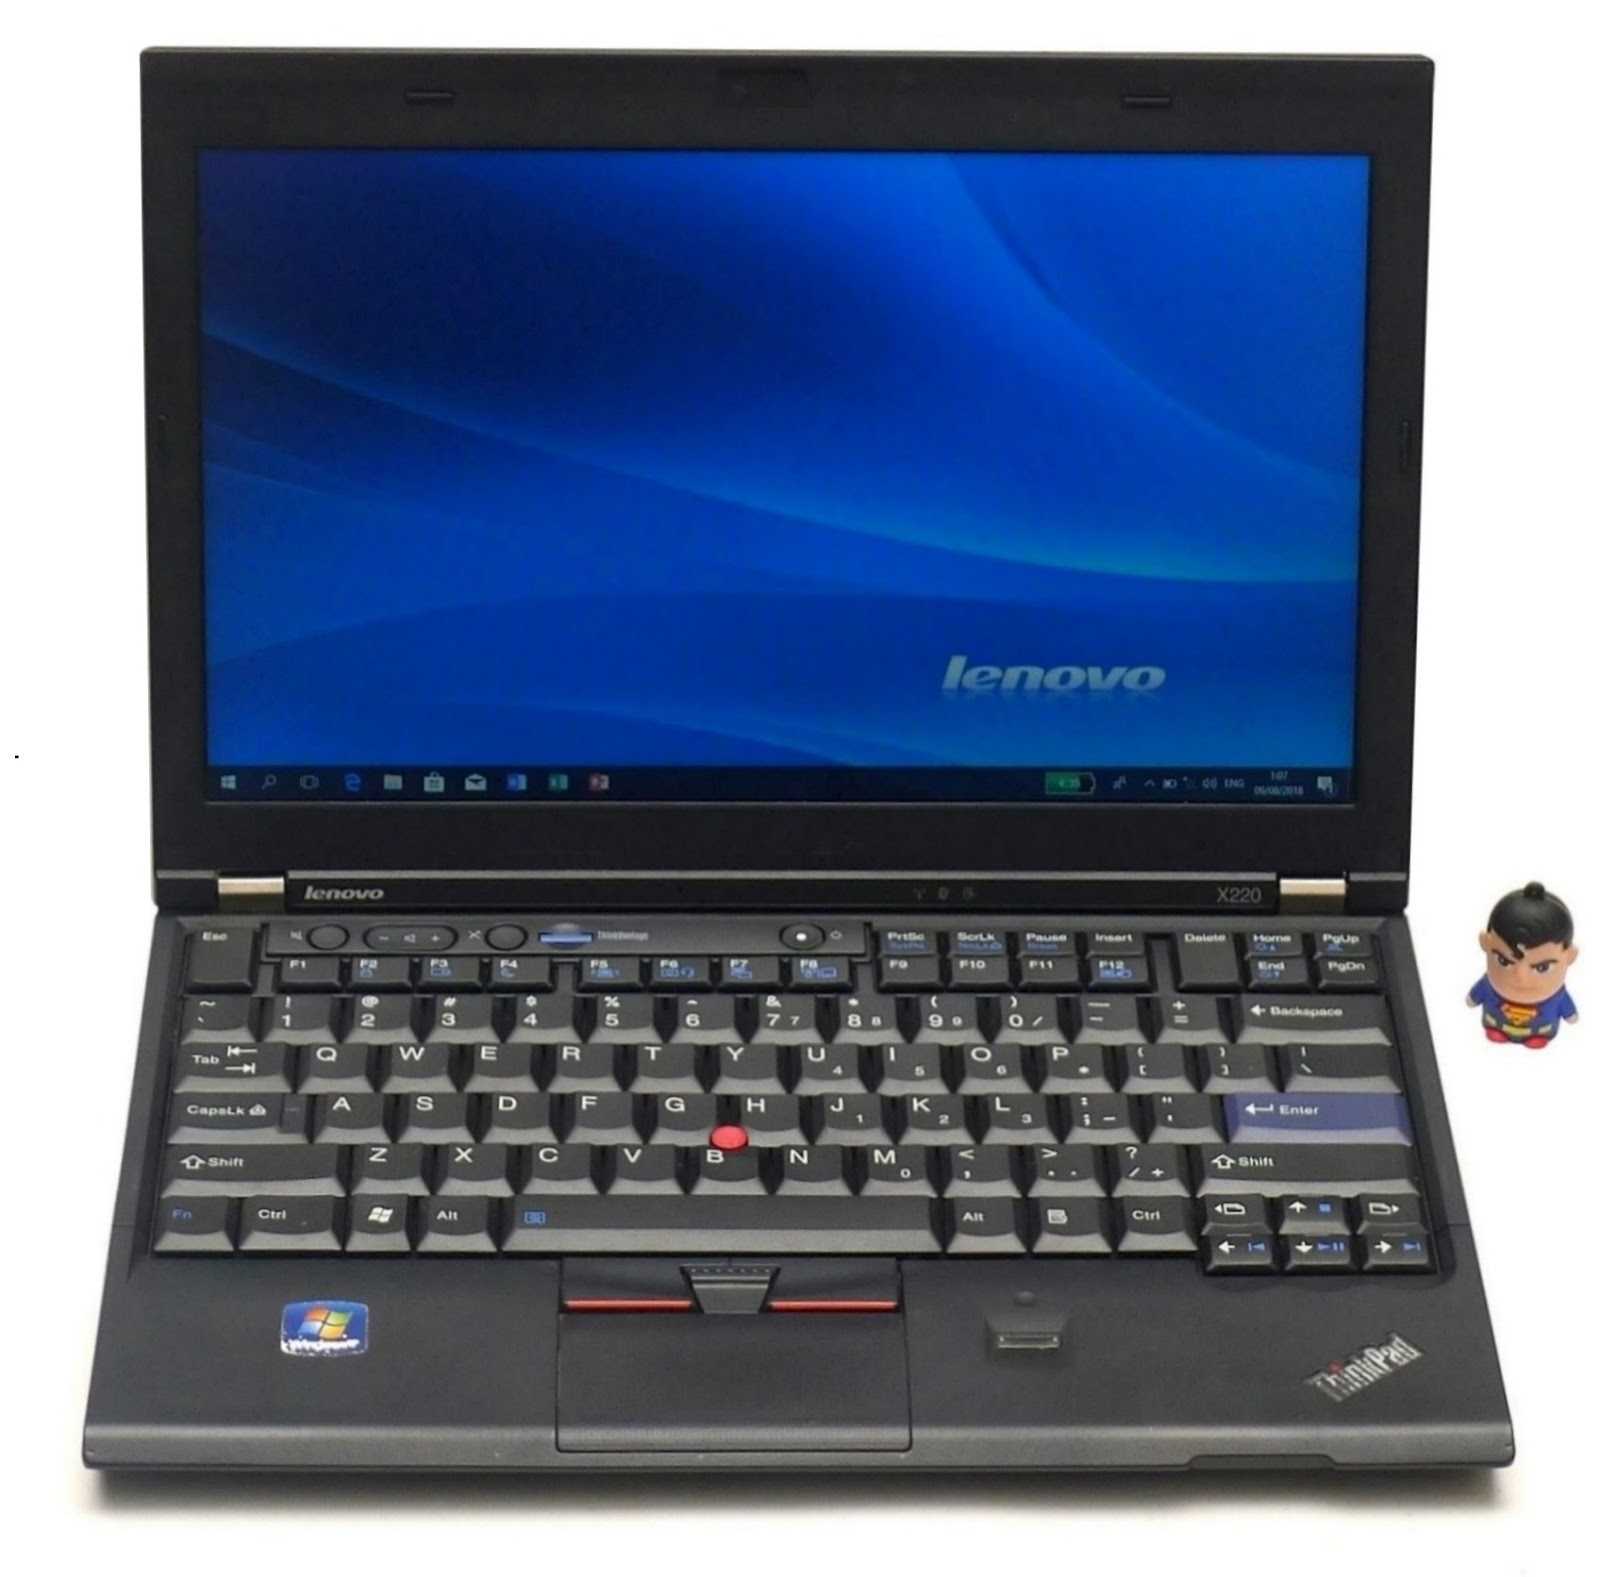 Ноутбук lenovo thinkpad x240 — купить, цена и характеристики, отзывы